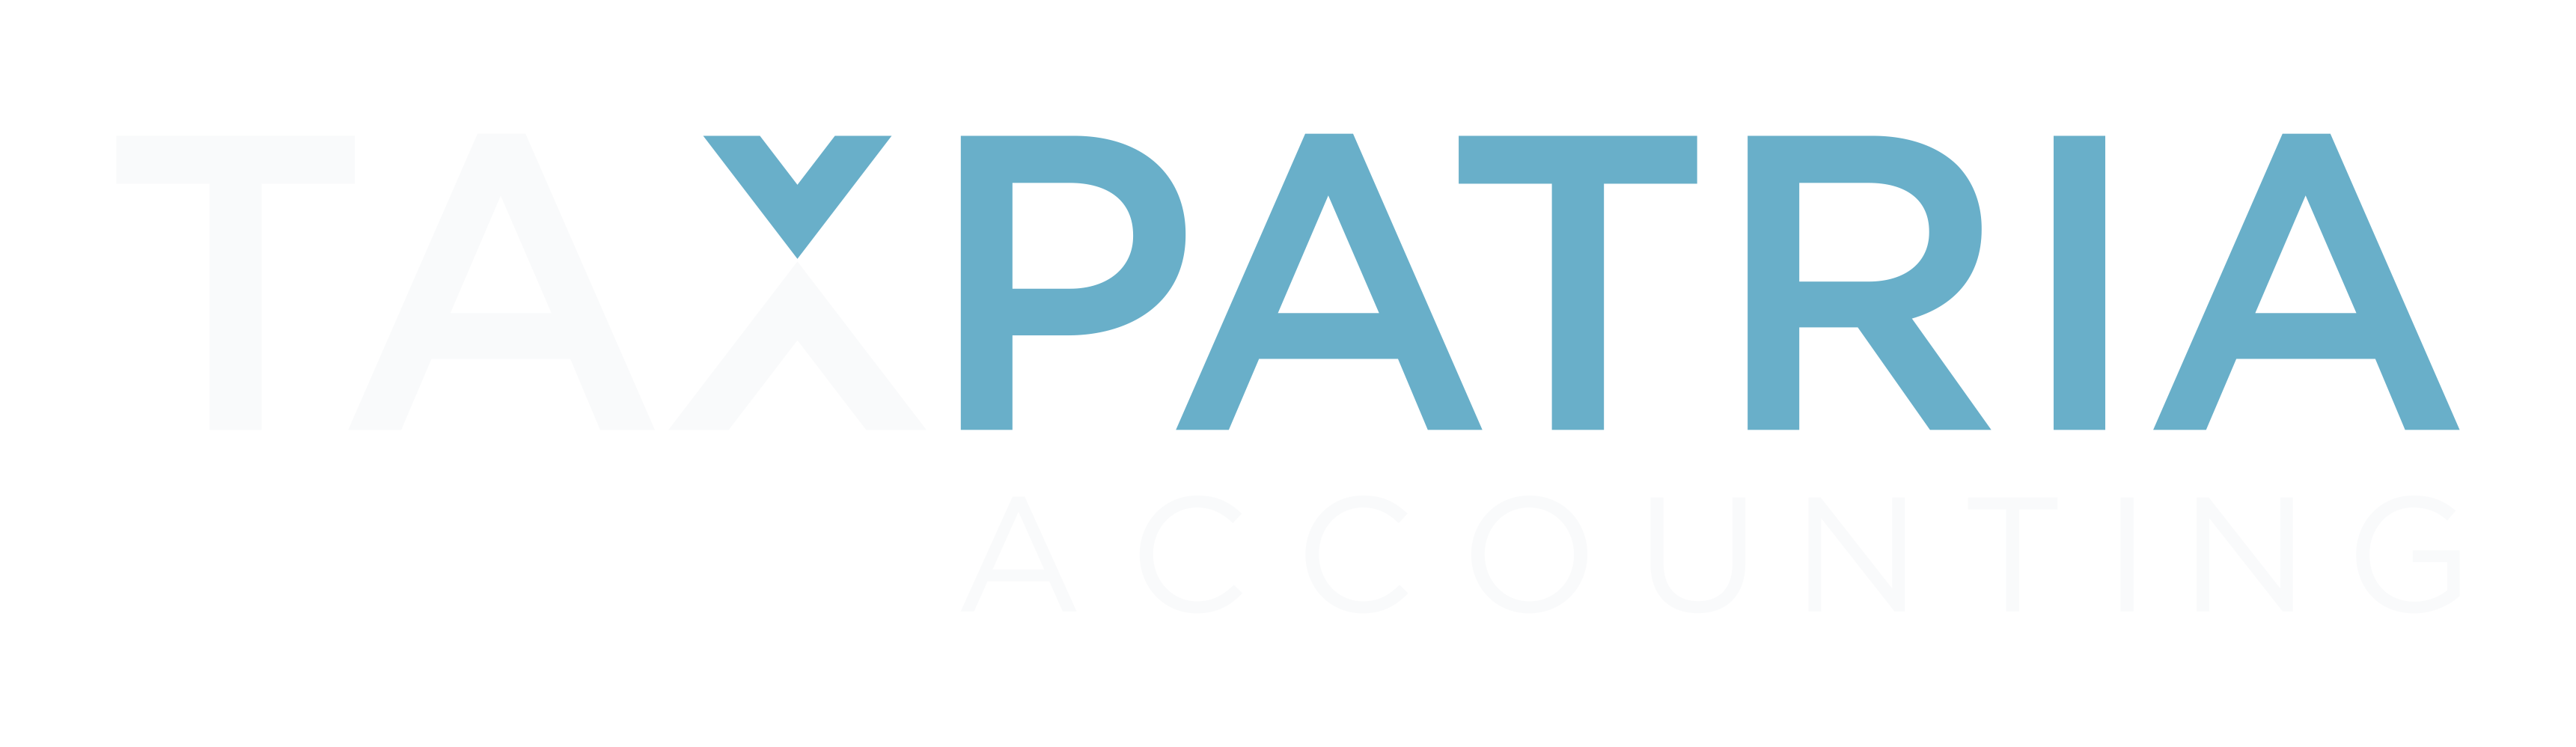 Taxpatria-tax-accounting-logo-fin-white